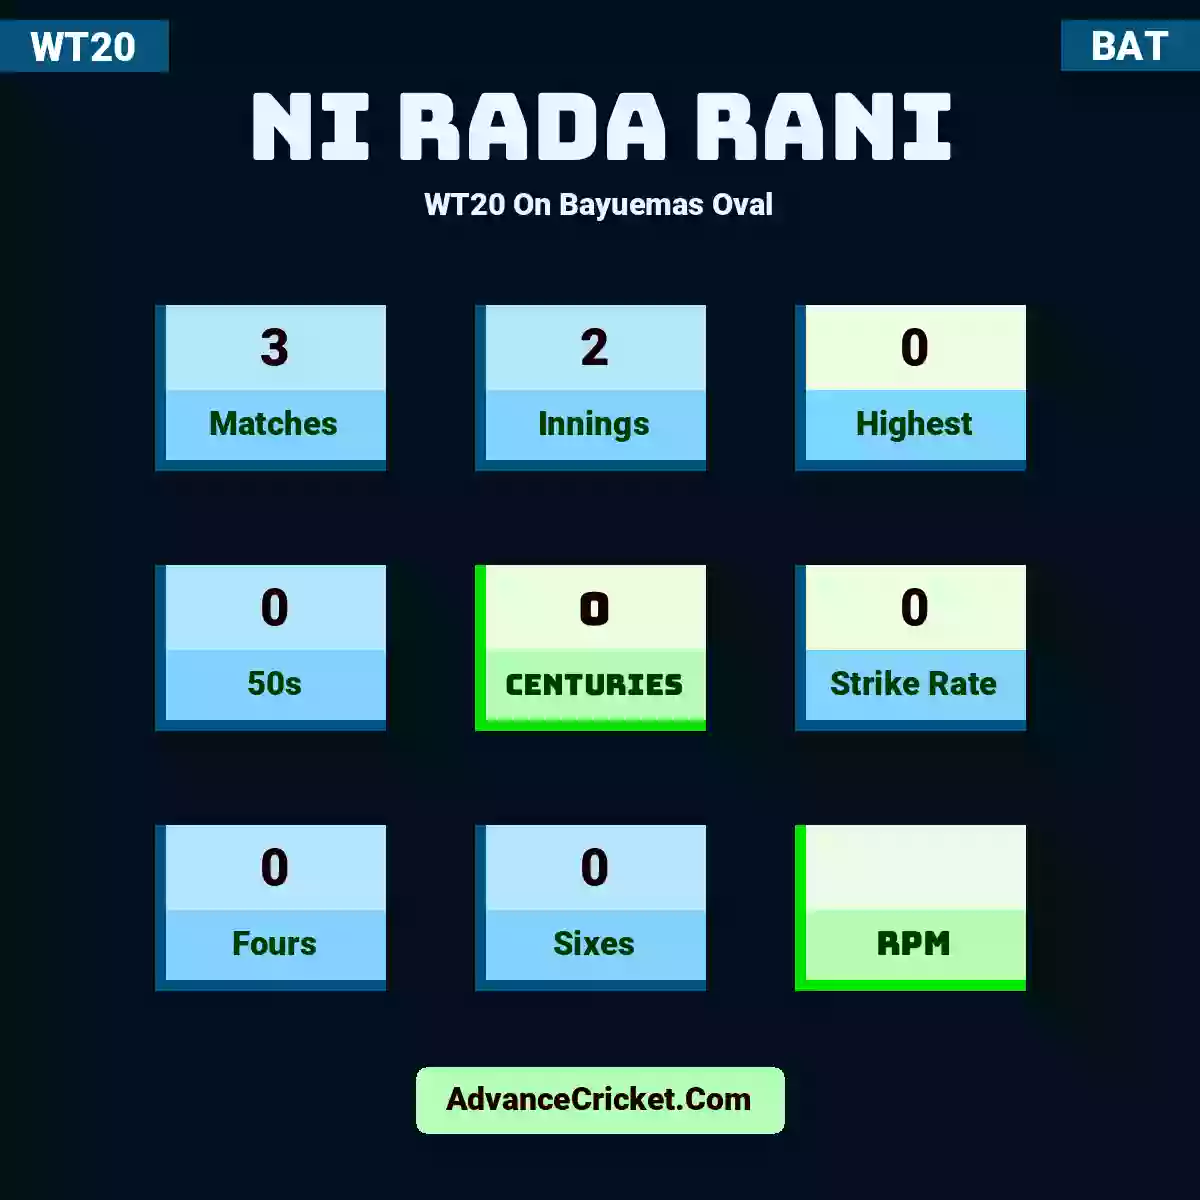 Ni Rada Rani WT20  On Bayuemas Oval, Ni Rada Rani played 3 matches, scored 0 runs as highest, 0 half-centuries, and 0 centuries, with a strike rate of 0. N.Rada.Rani hit 0 fours and 0 sixes.